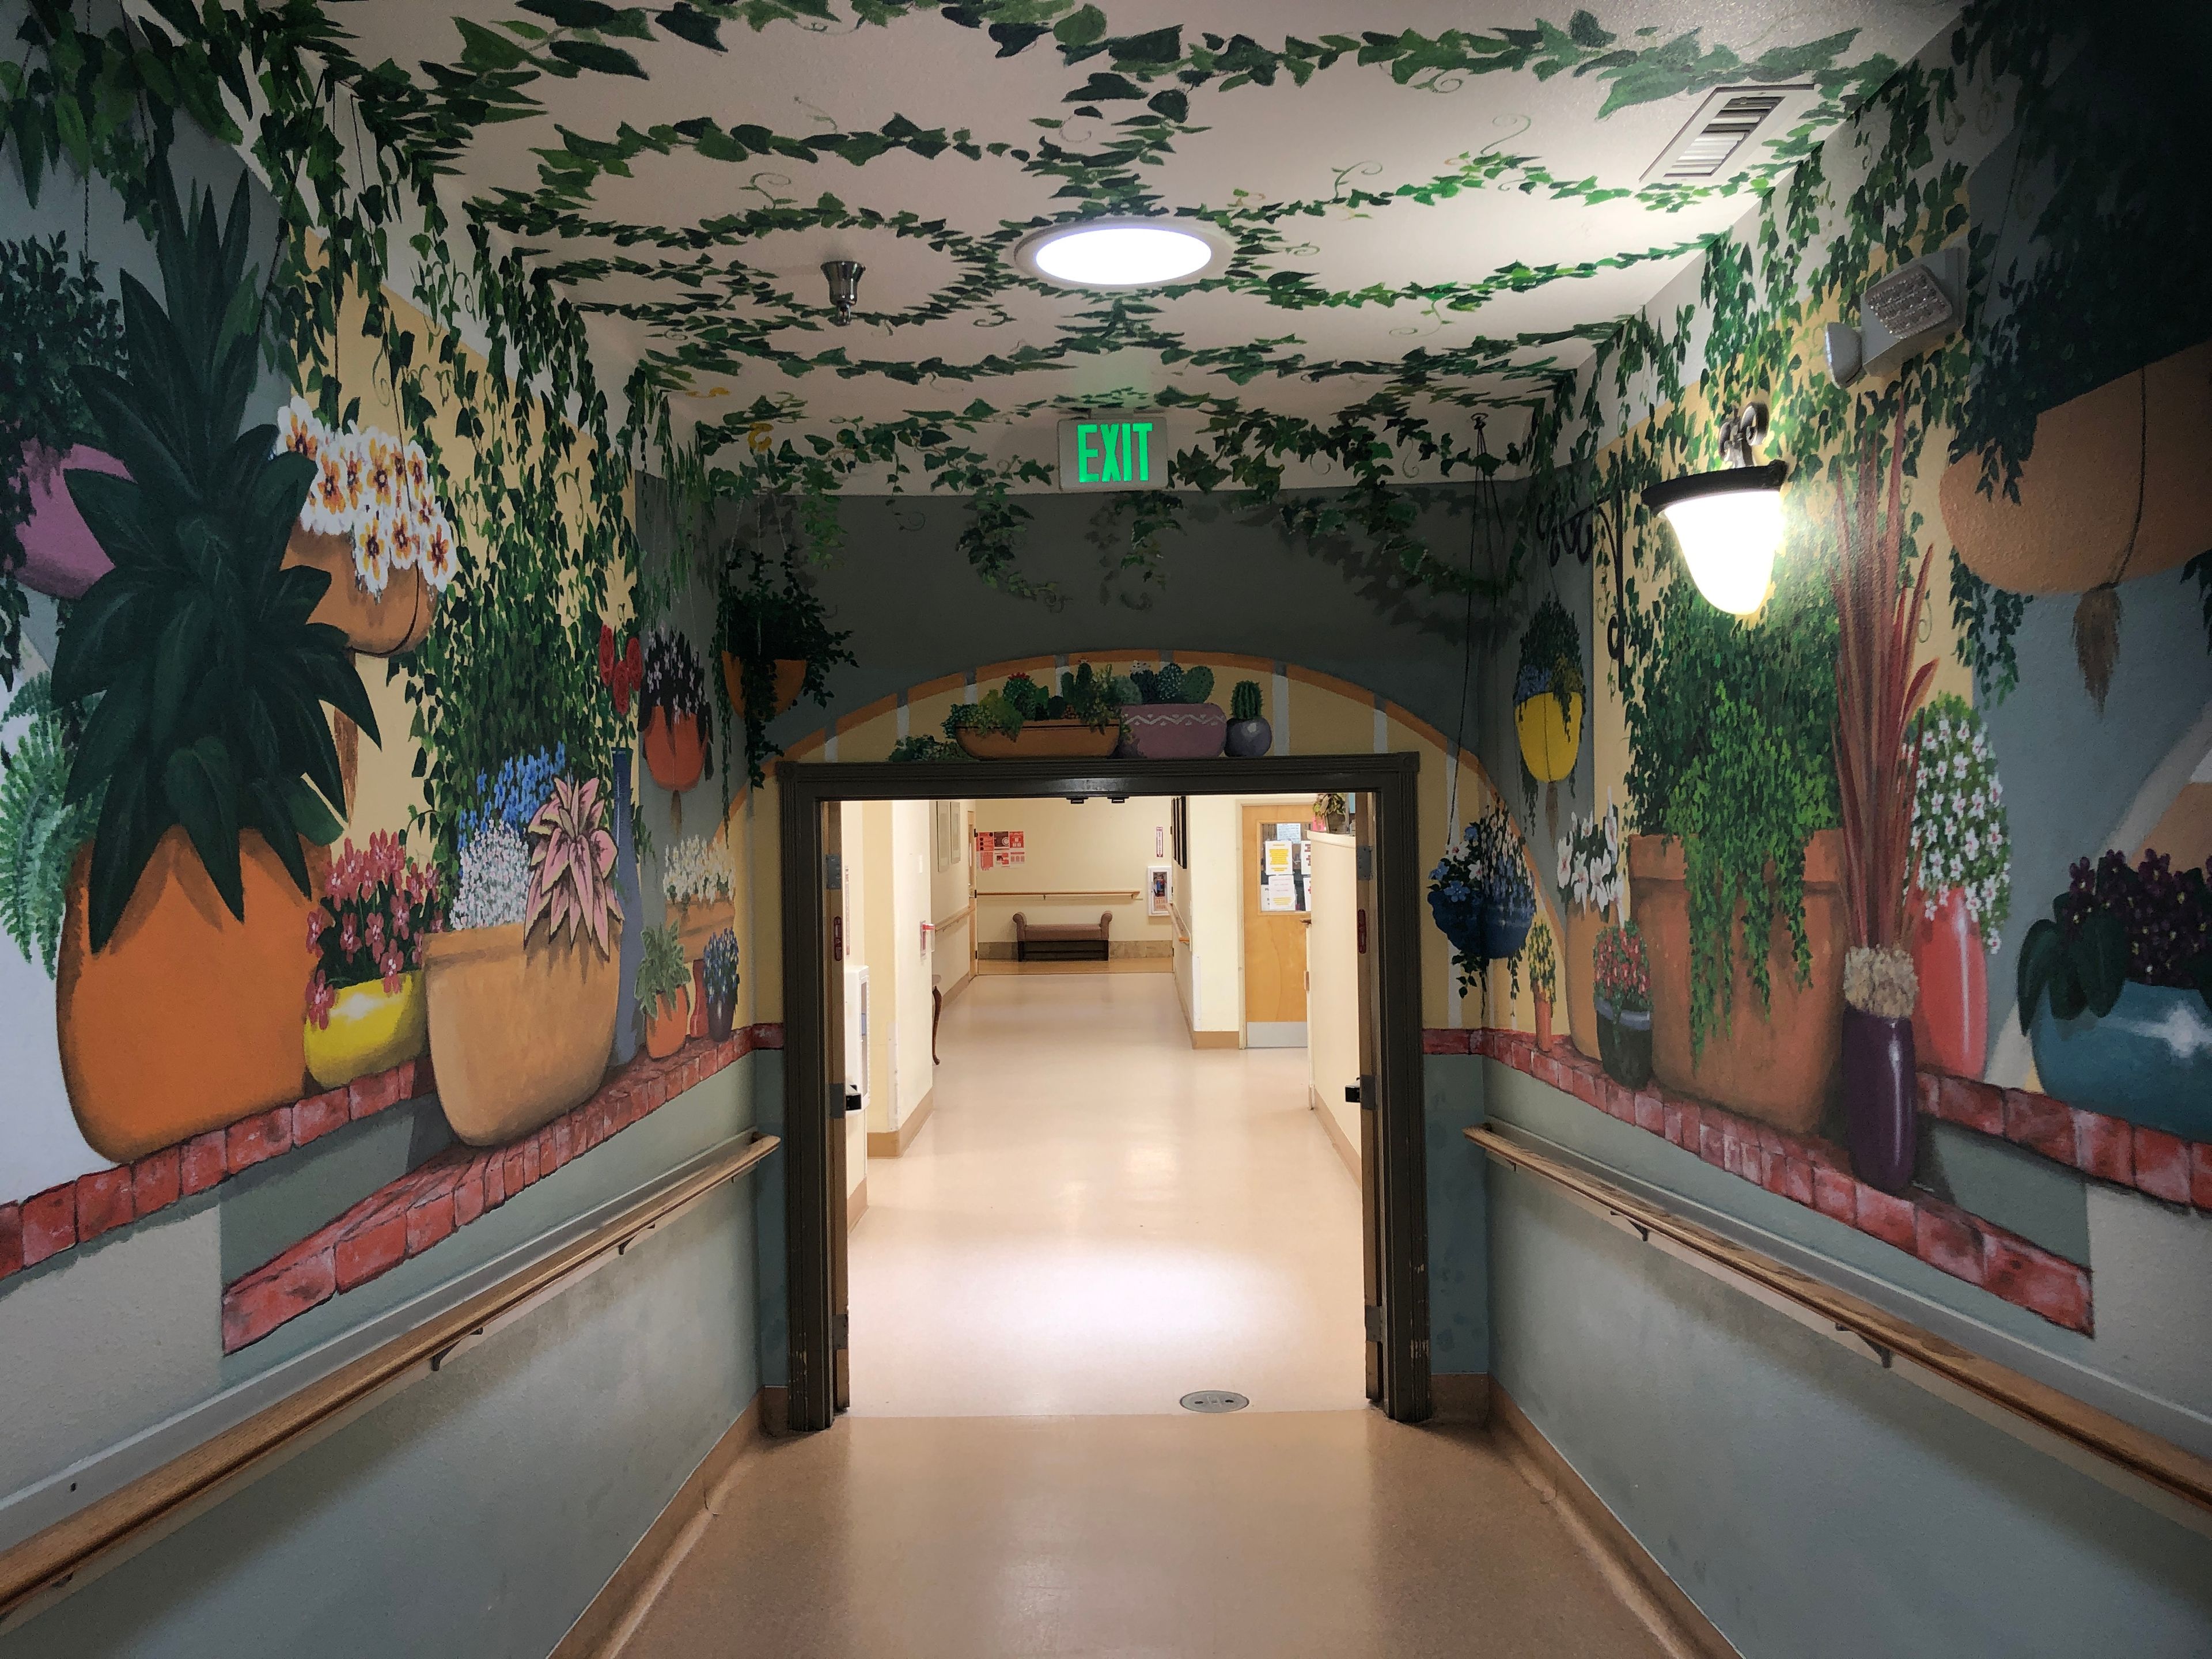 Mural Hallway